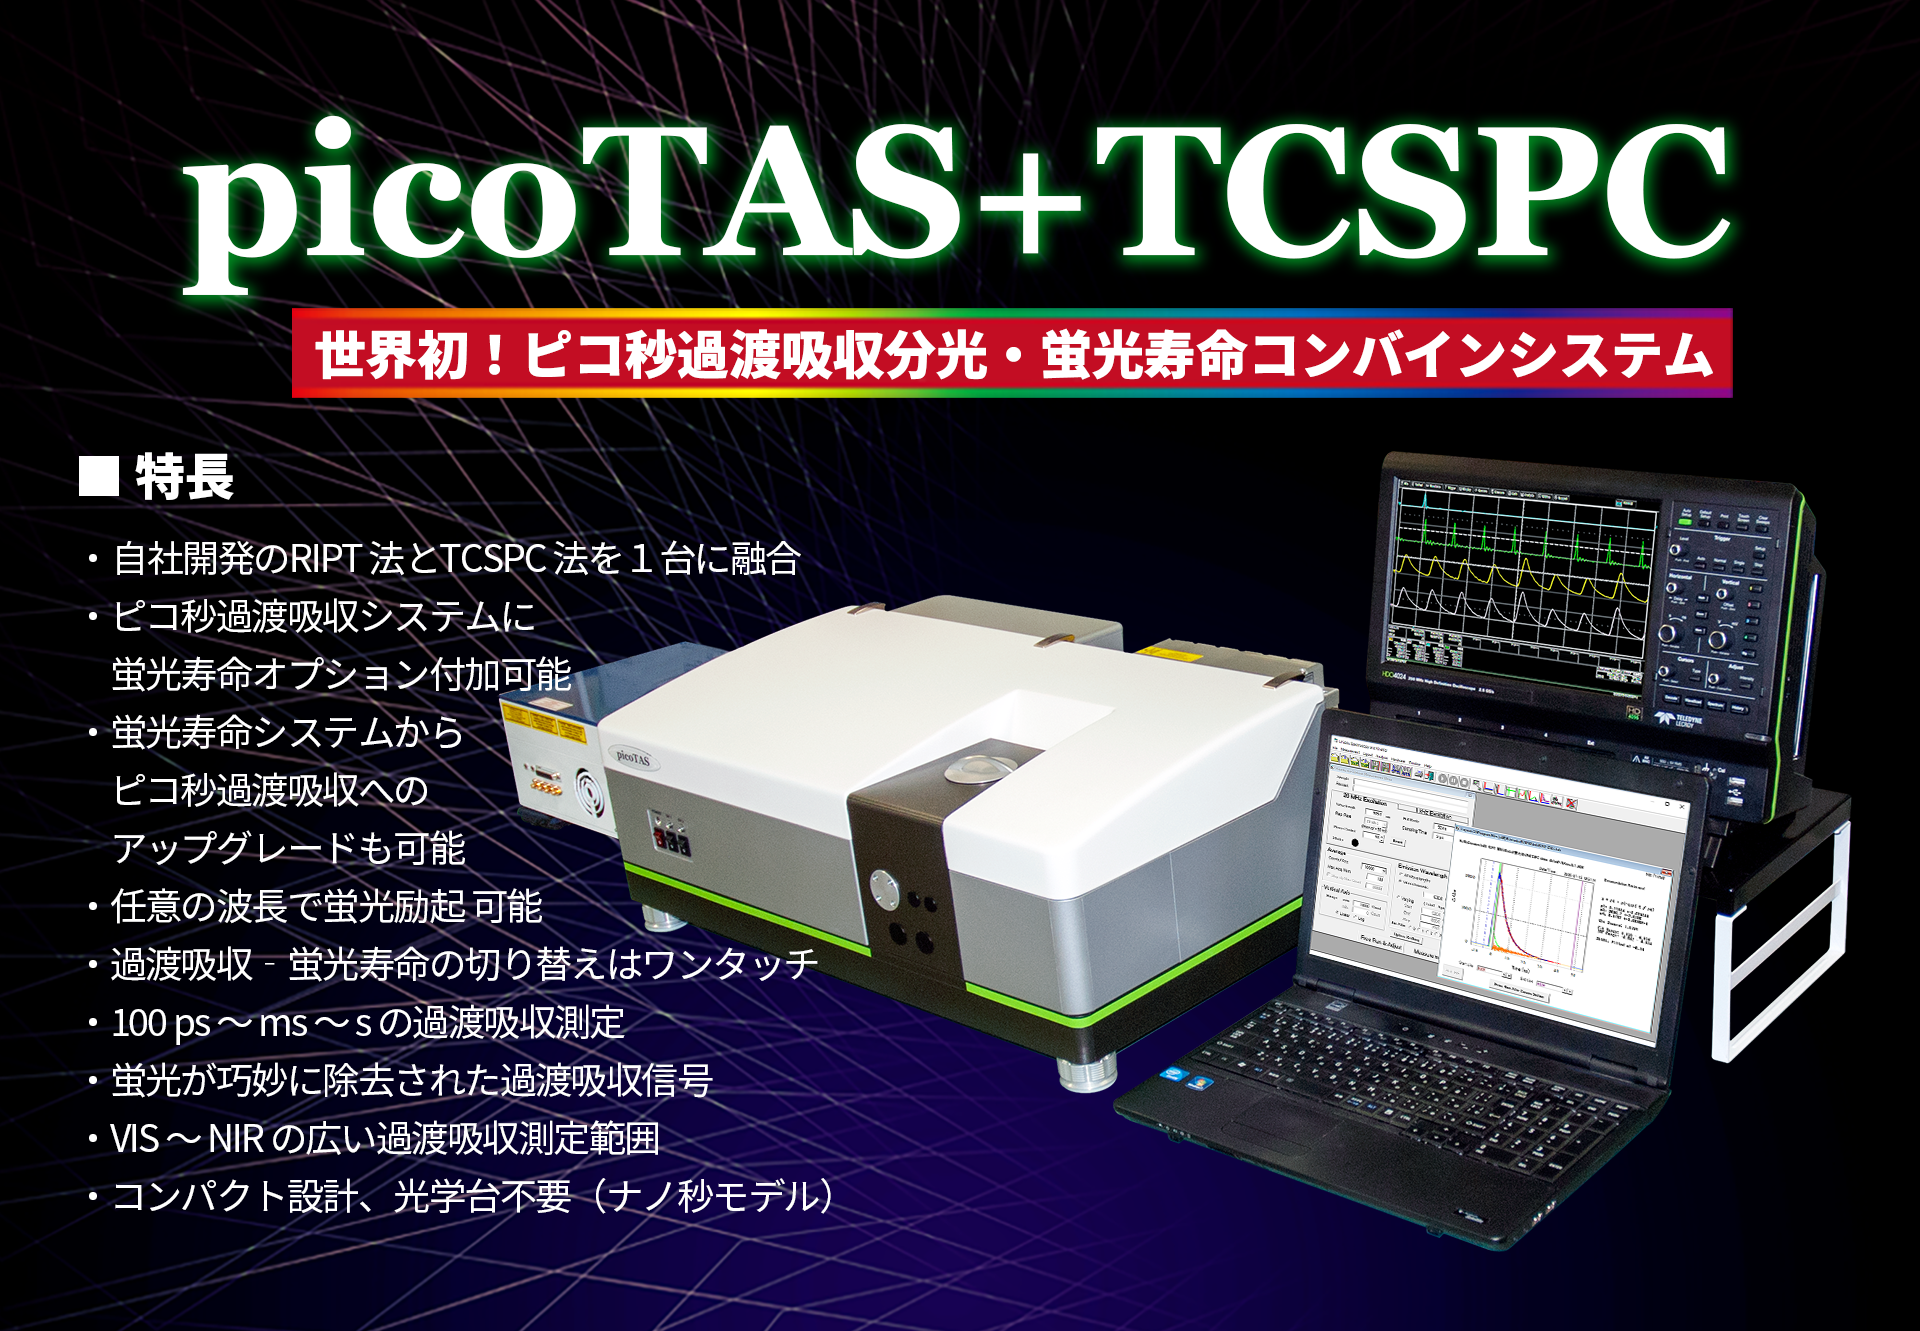 picoTAS+TCSPC